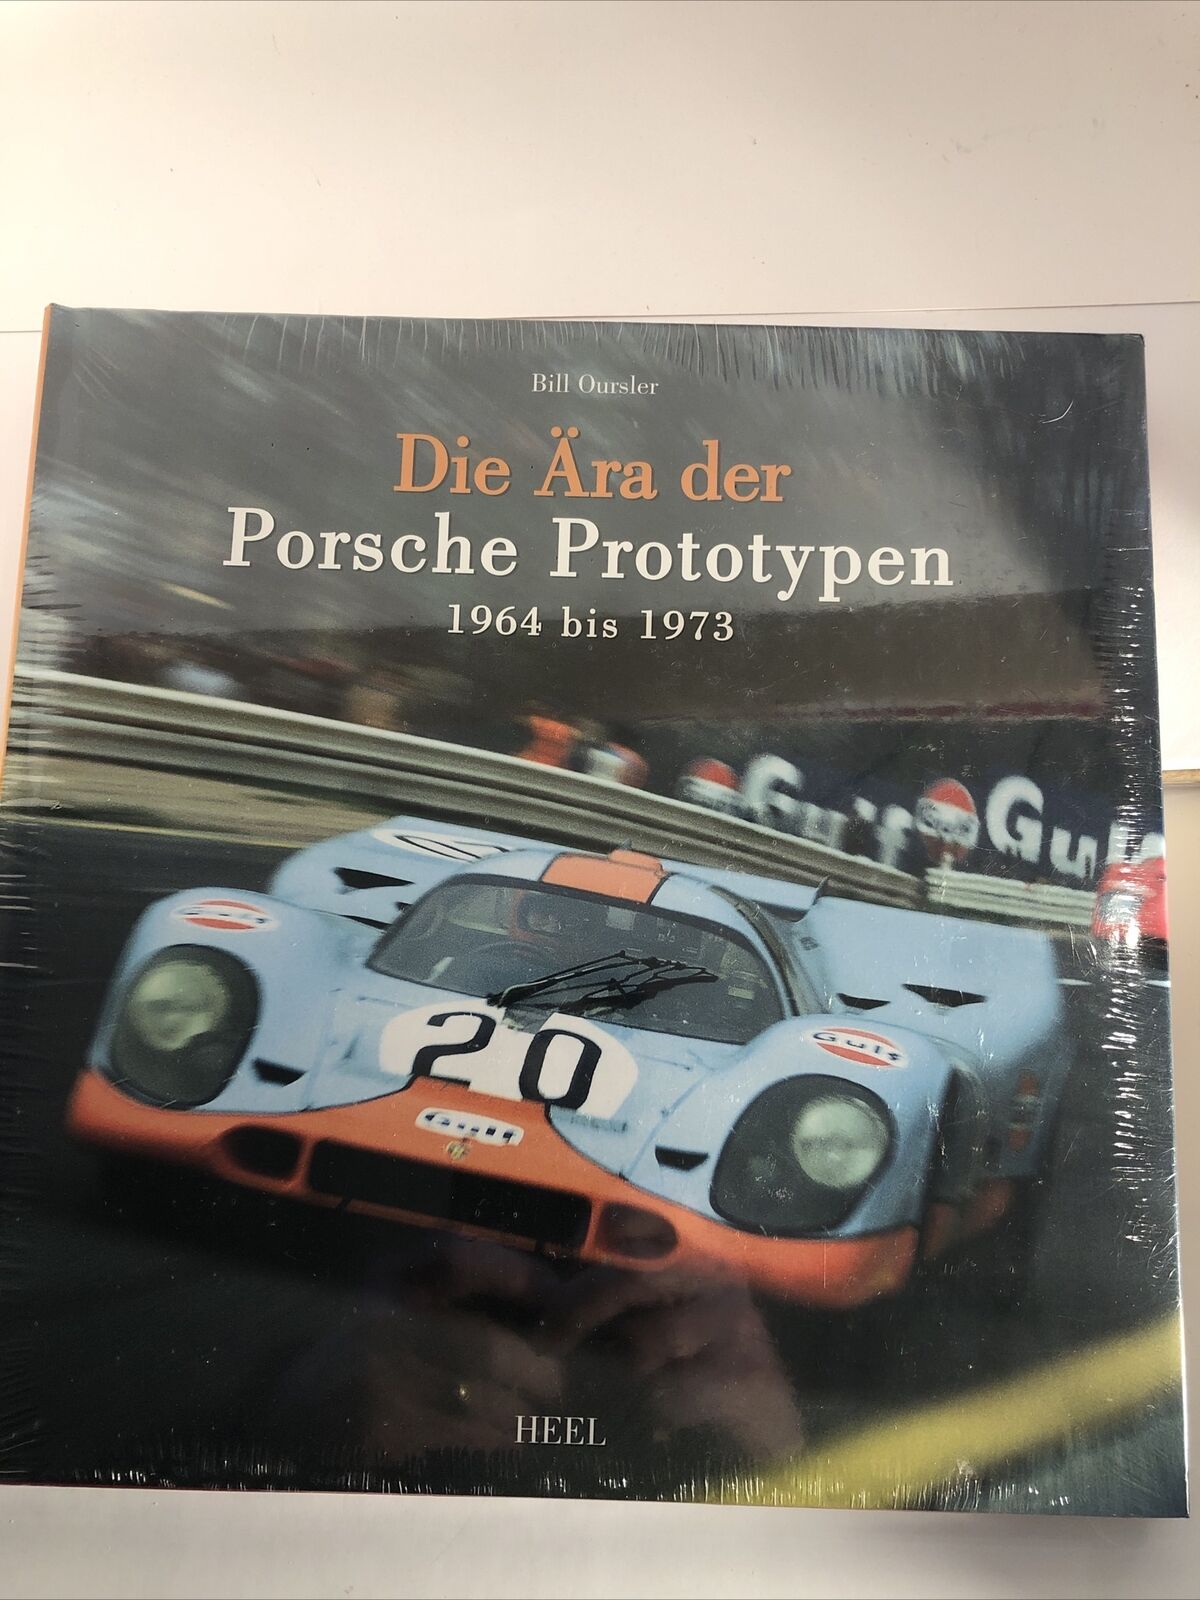 Porsche Protoypen by Bill Ourslet 1964-1973 